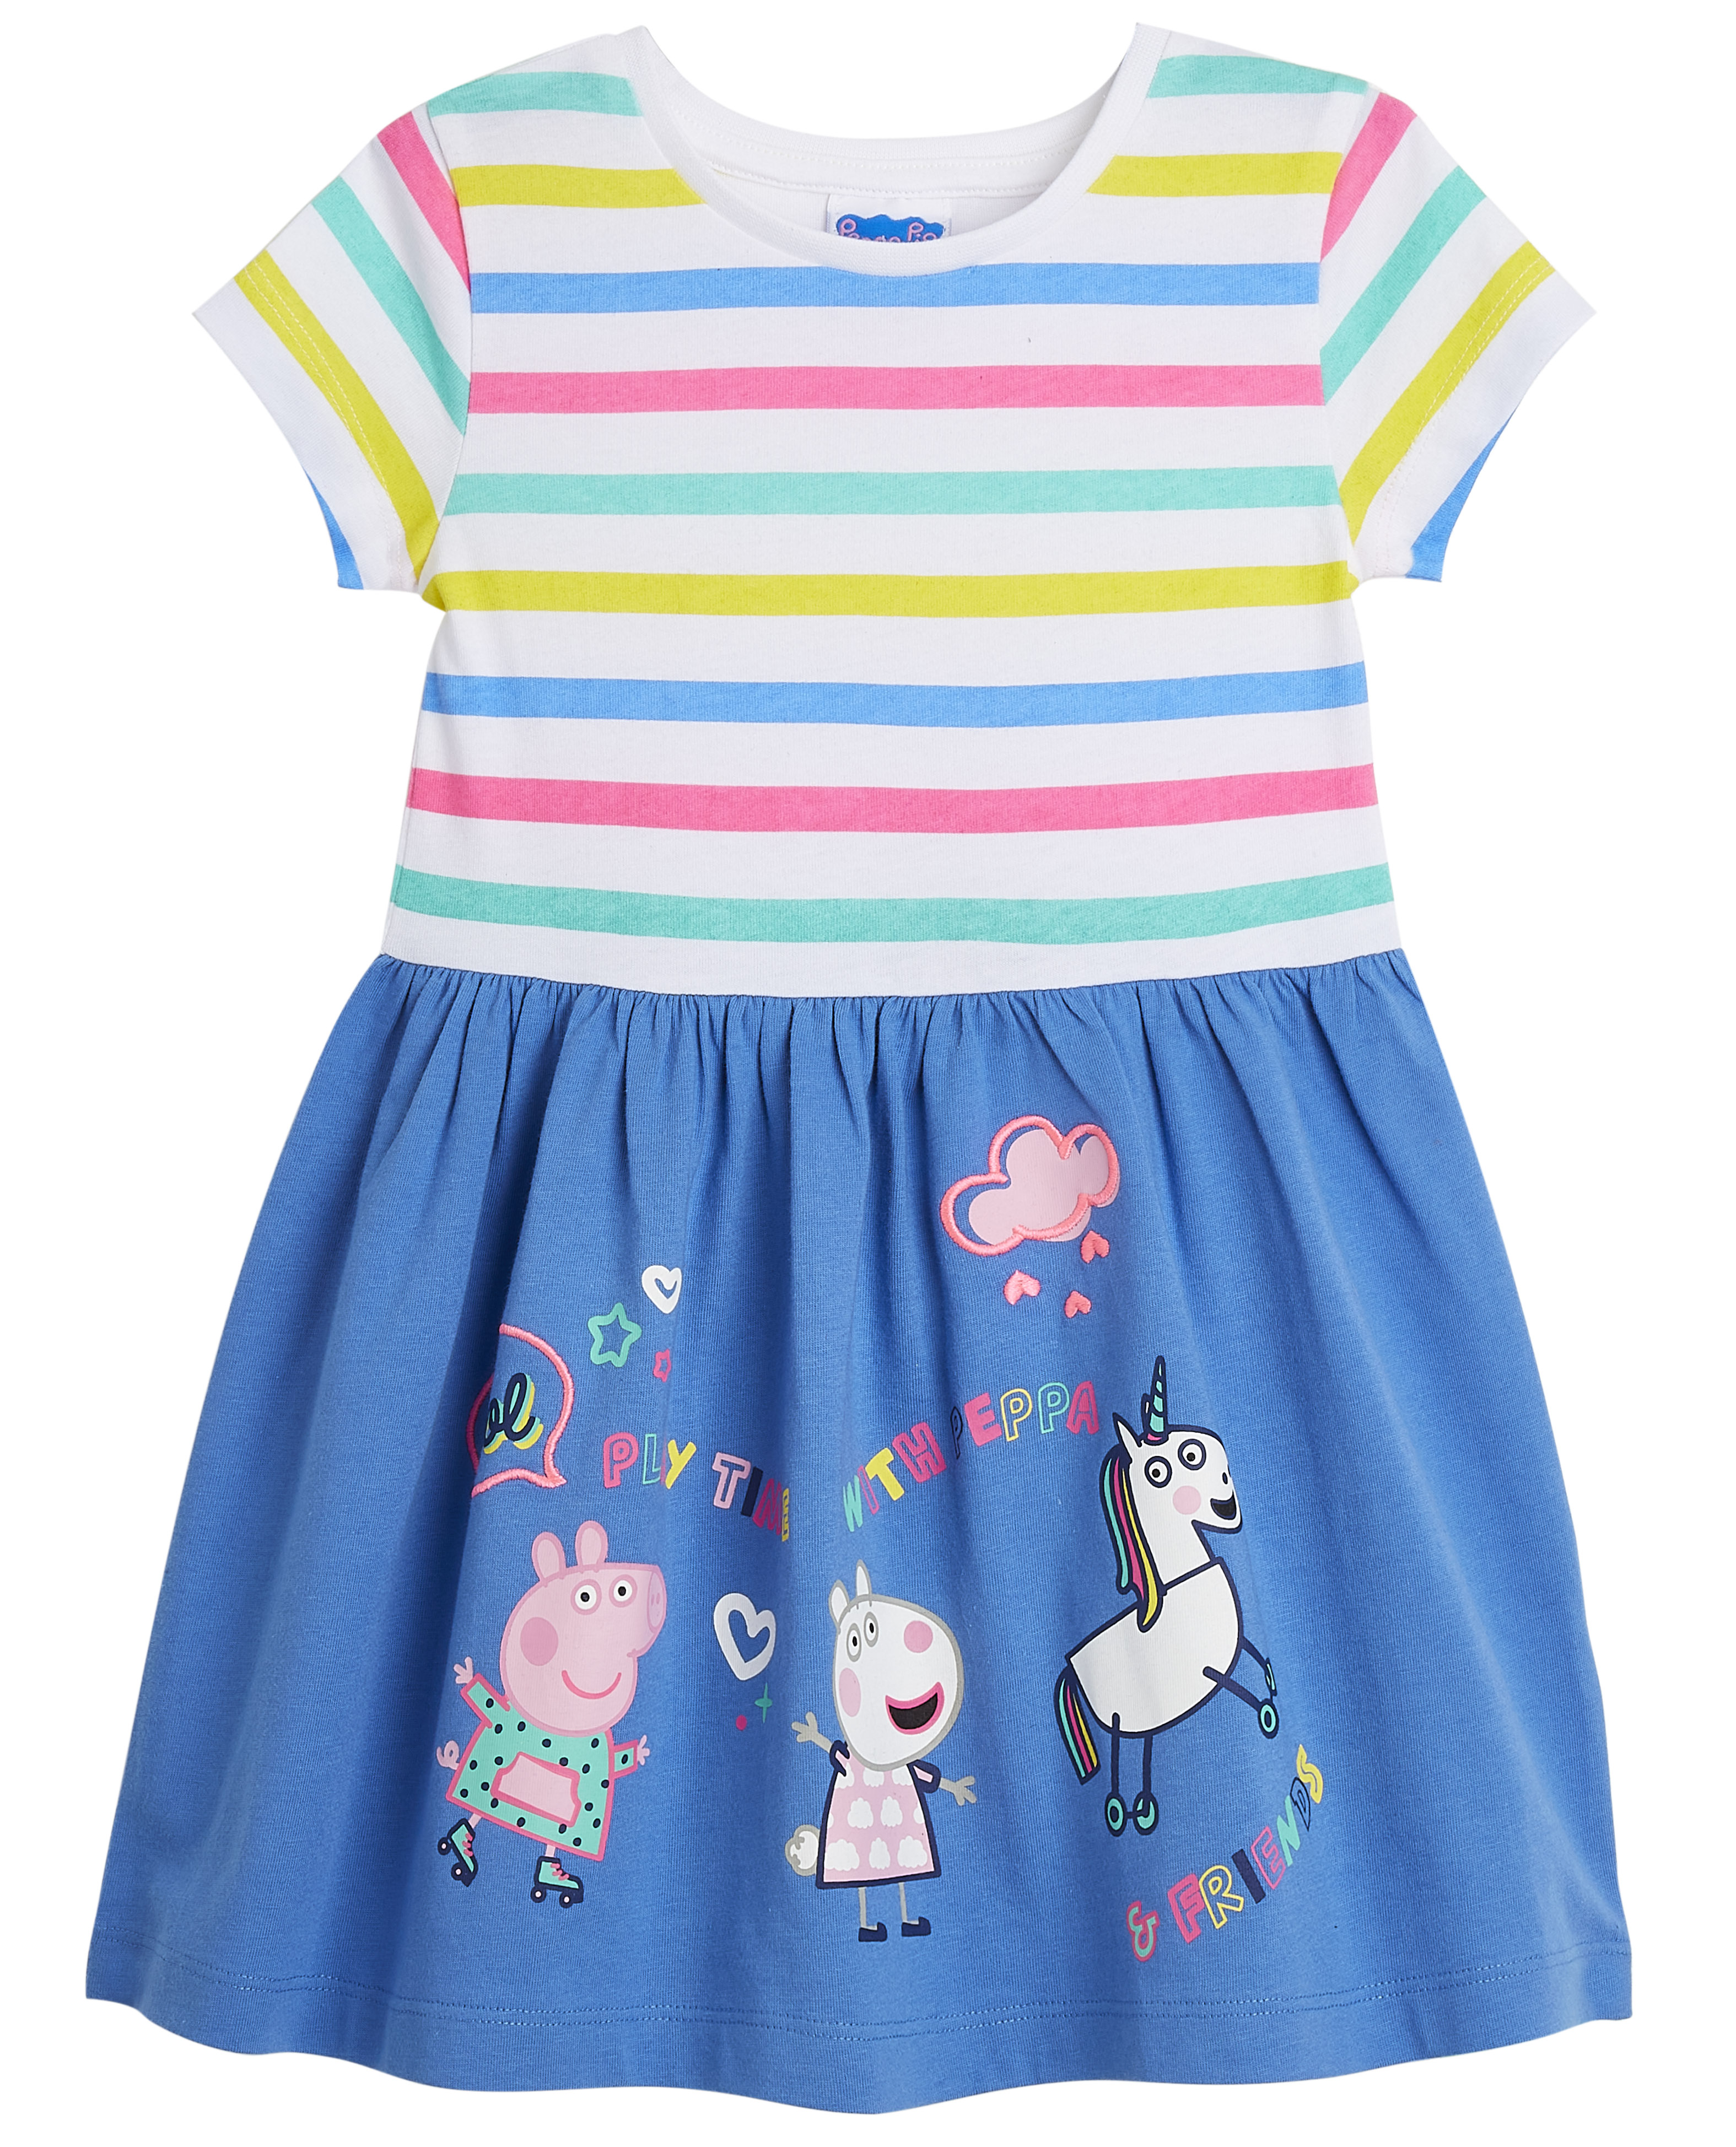 PeppaPig Summer Dress, Girls Dresses | eBay